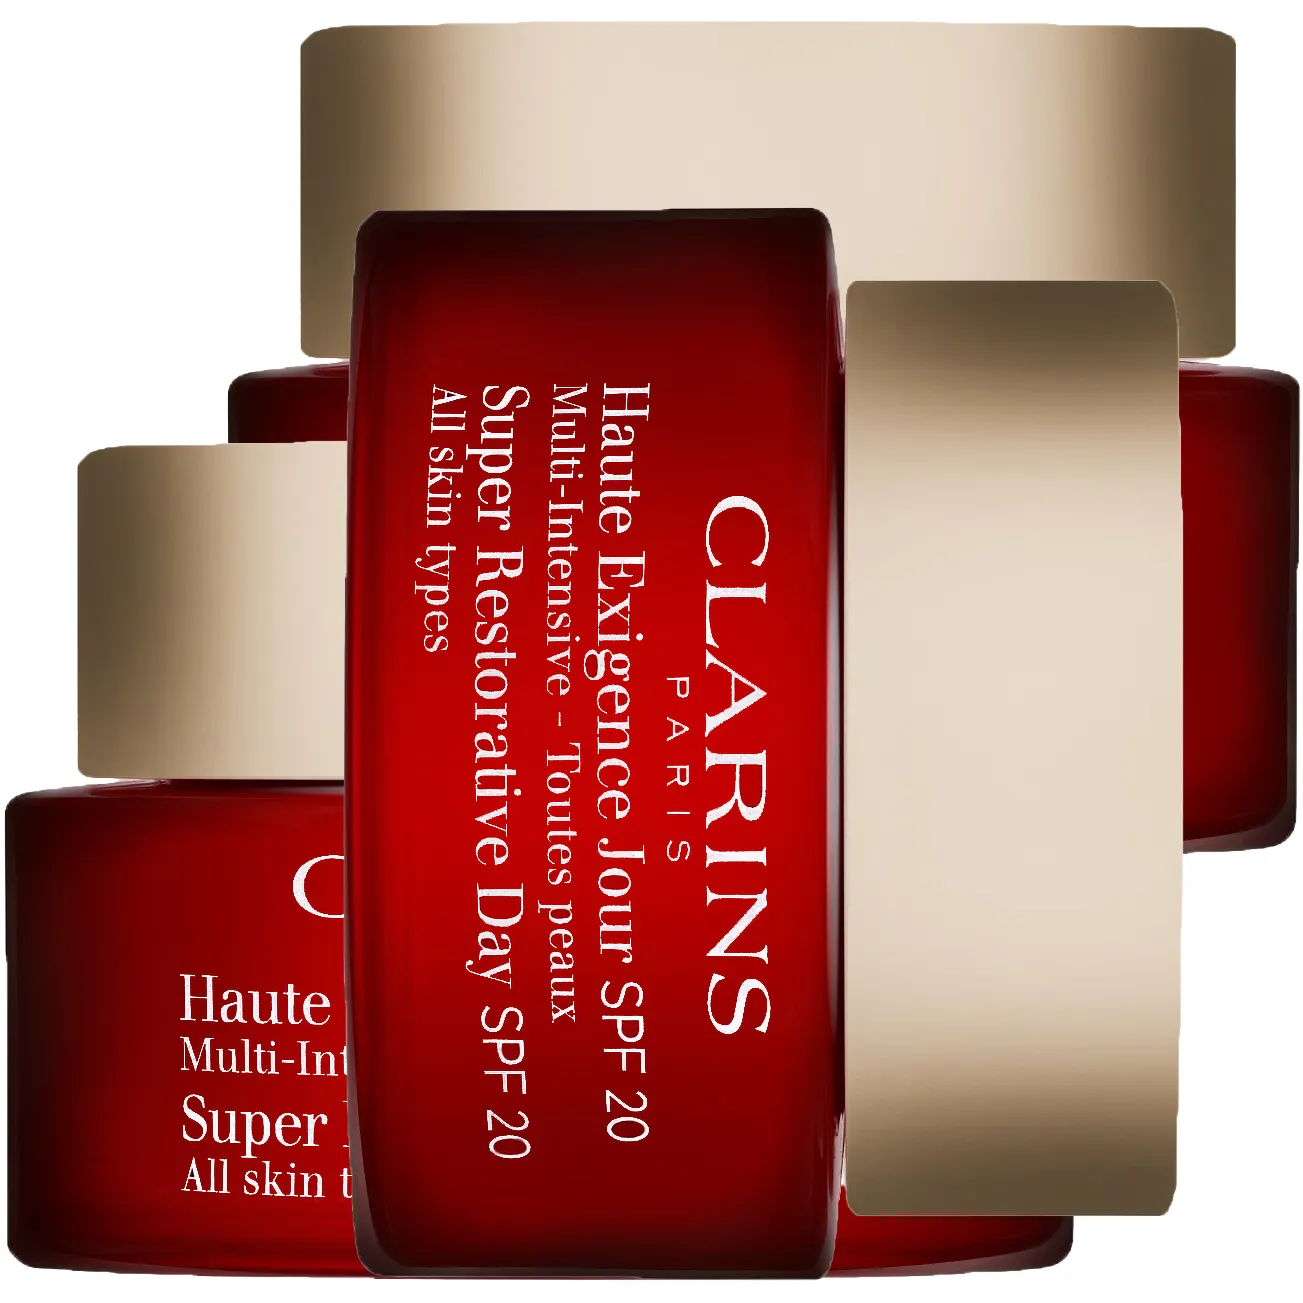 Free Clarins SPF 20 Cream